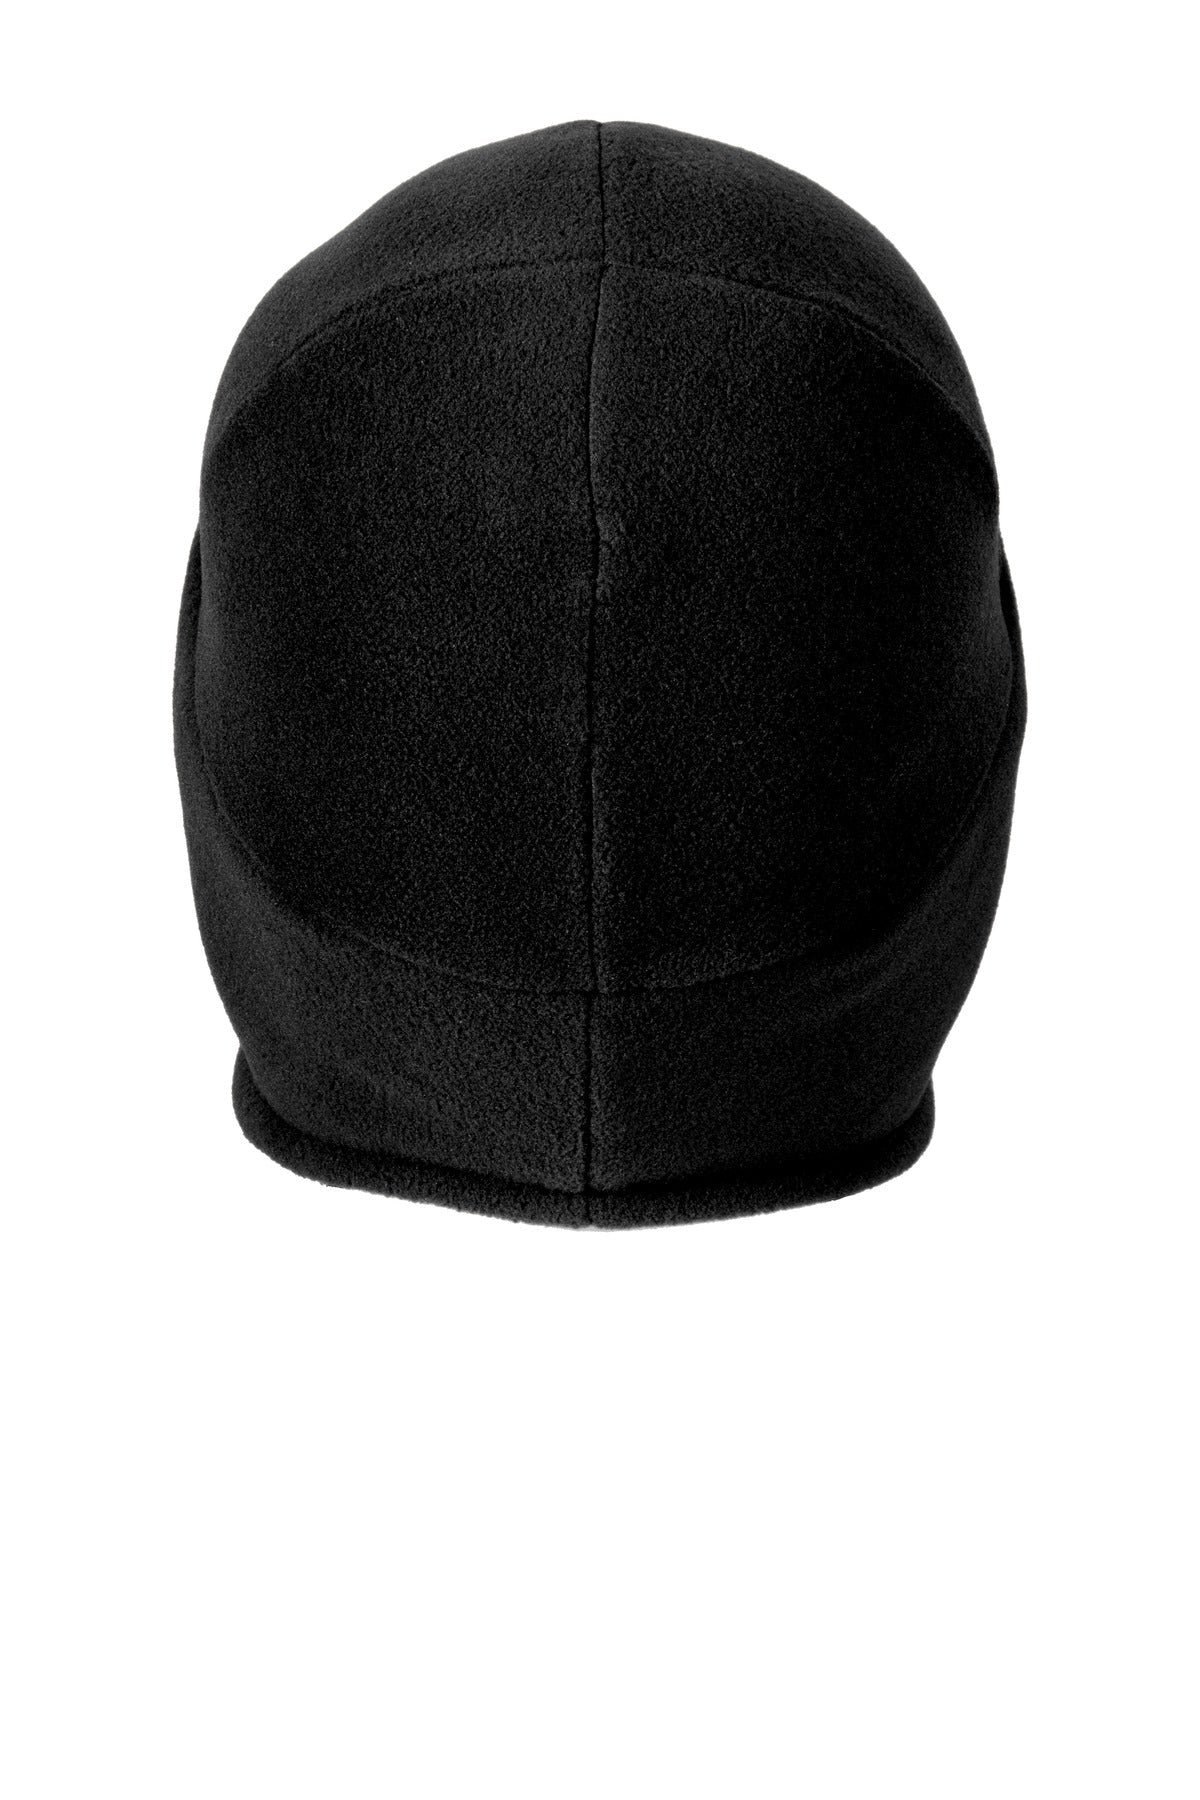 Carhartt ® Fleece 2-In-1 Headwear. CTA202 - DFW Impression